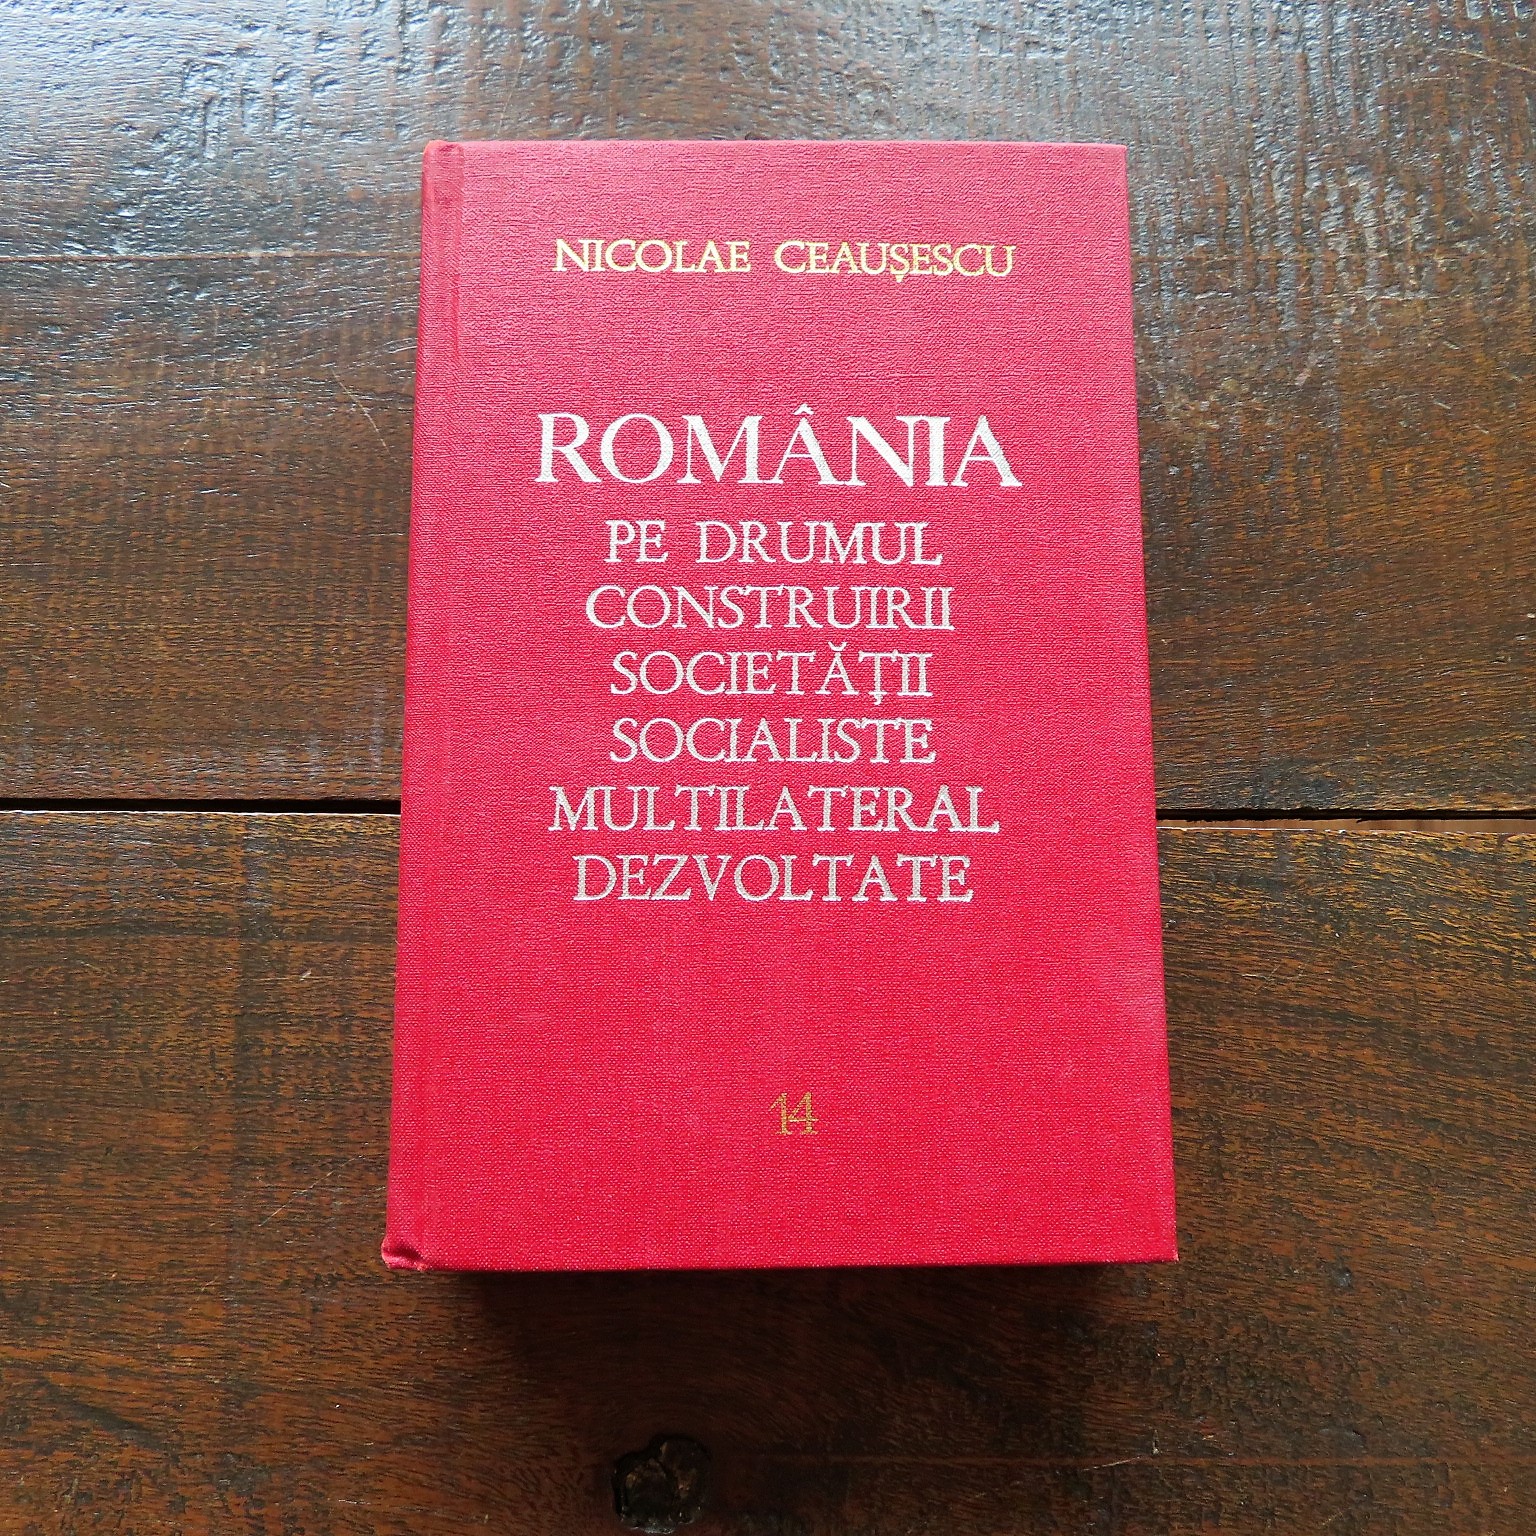 romania-pe-drumul-construirii-societatii-socialiste-multilateral-dezvoltate-vol-1-9